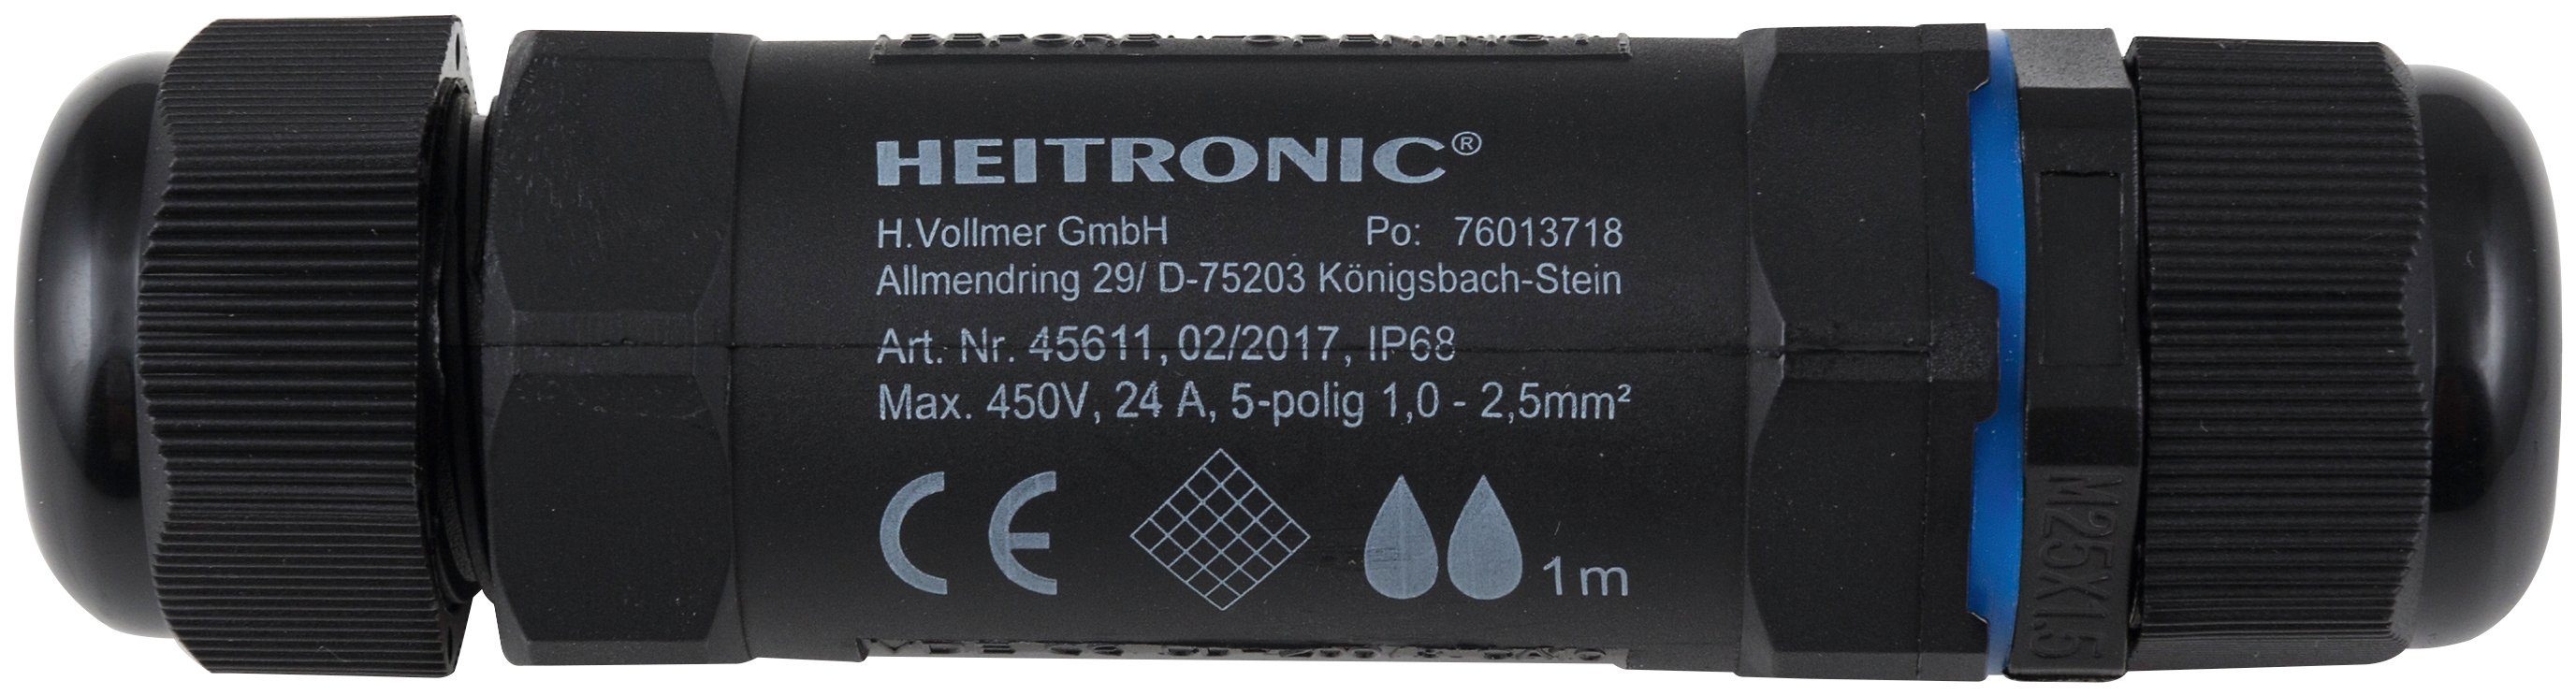 HEITRONIC Verbindungsmuffe Kabelmuffe 5-polig IP68, 1-tlg., Kabel-Verbindungsstück wasserdicht bis 1 m Wassertiefe